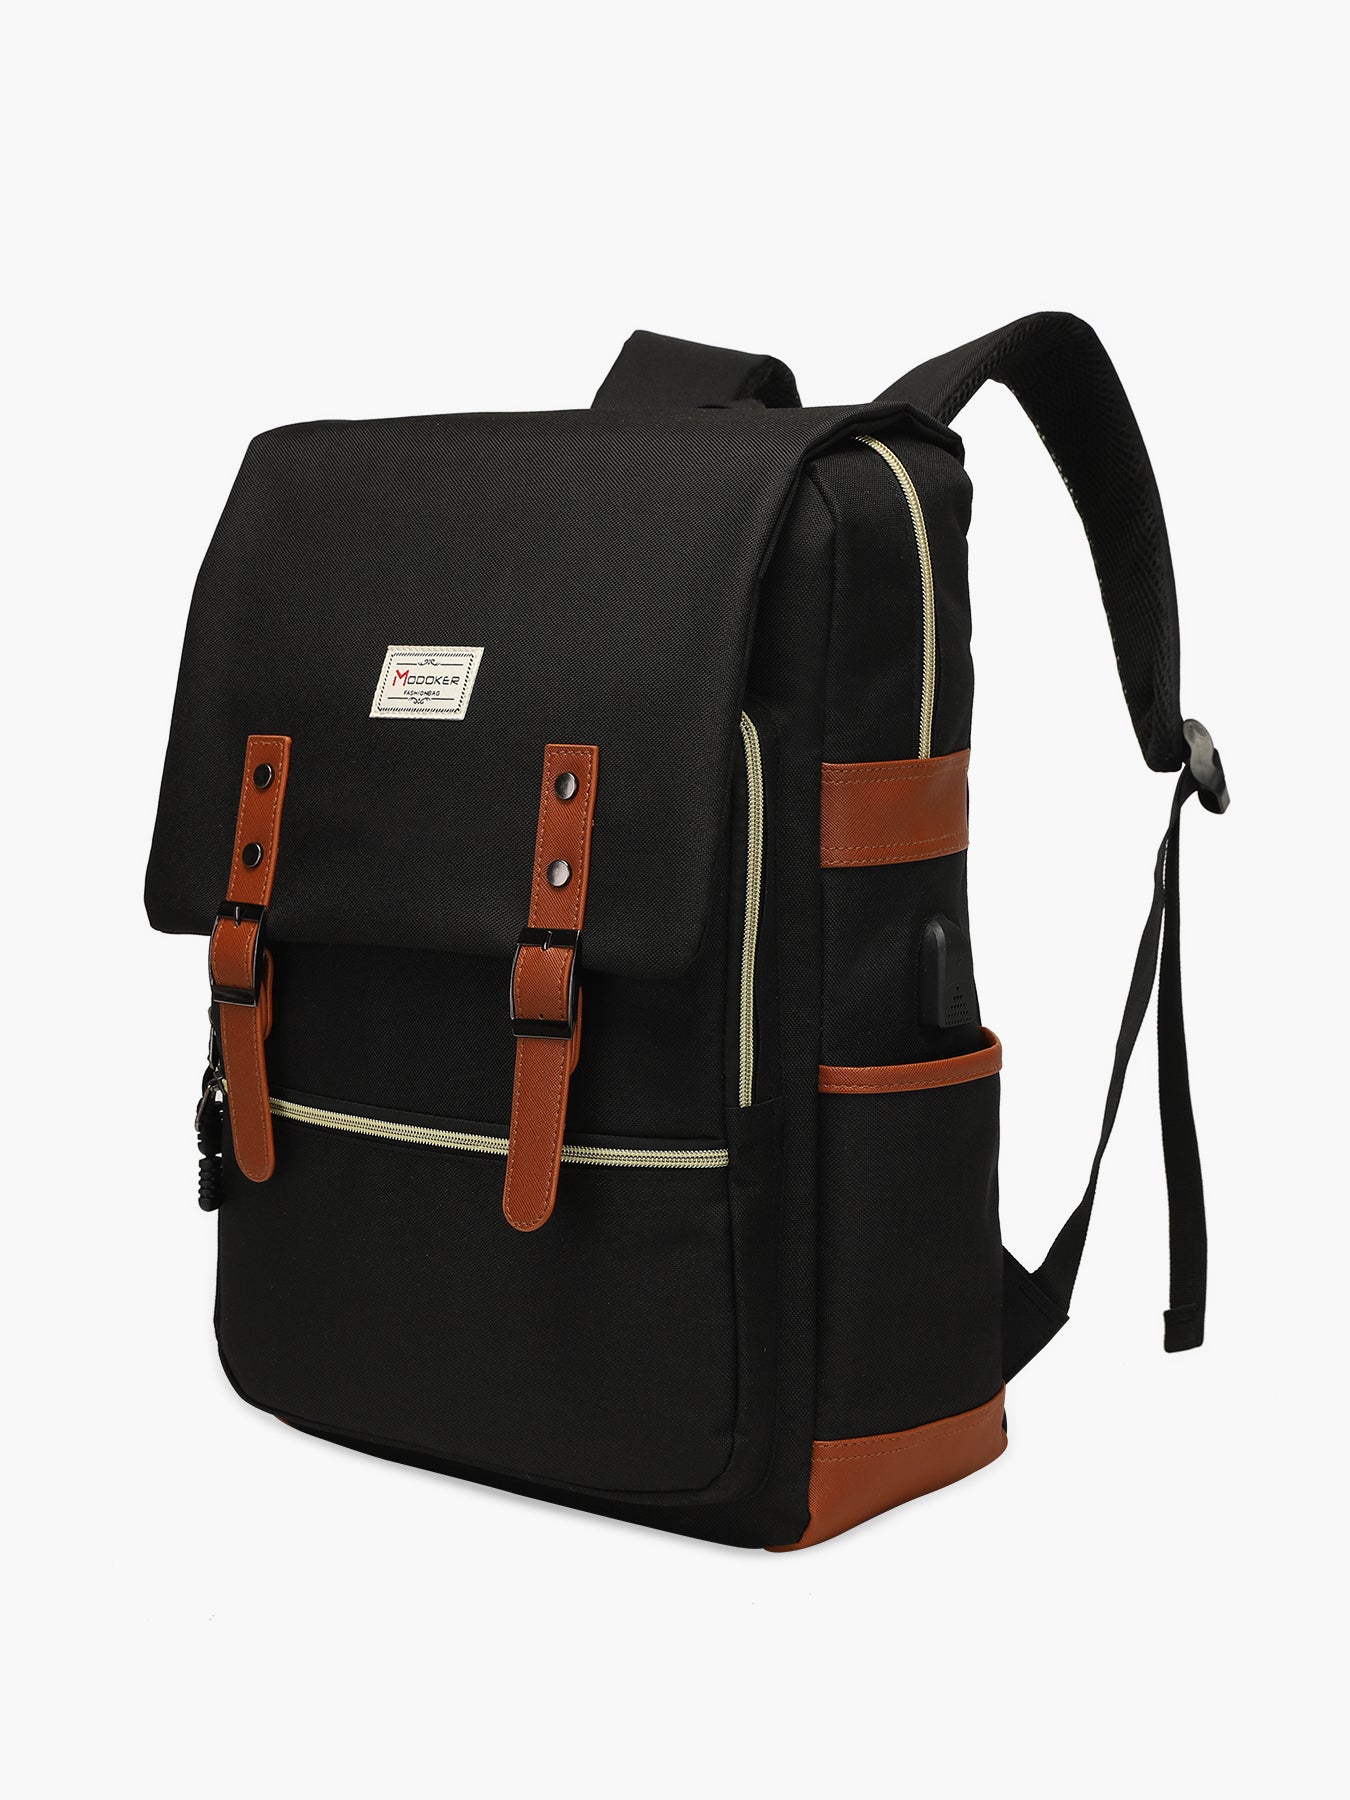 MODOKER Vintage Laptop Backpack for Women Men- Black Travel Backpack 